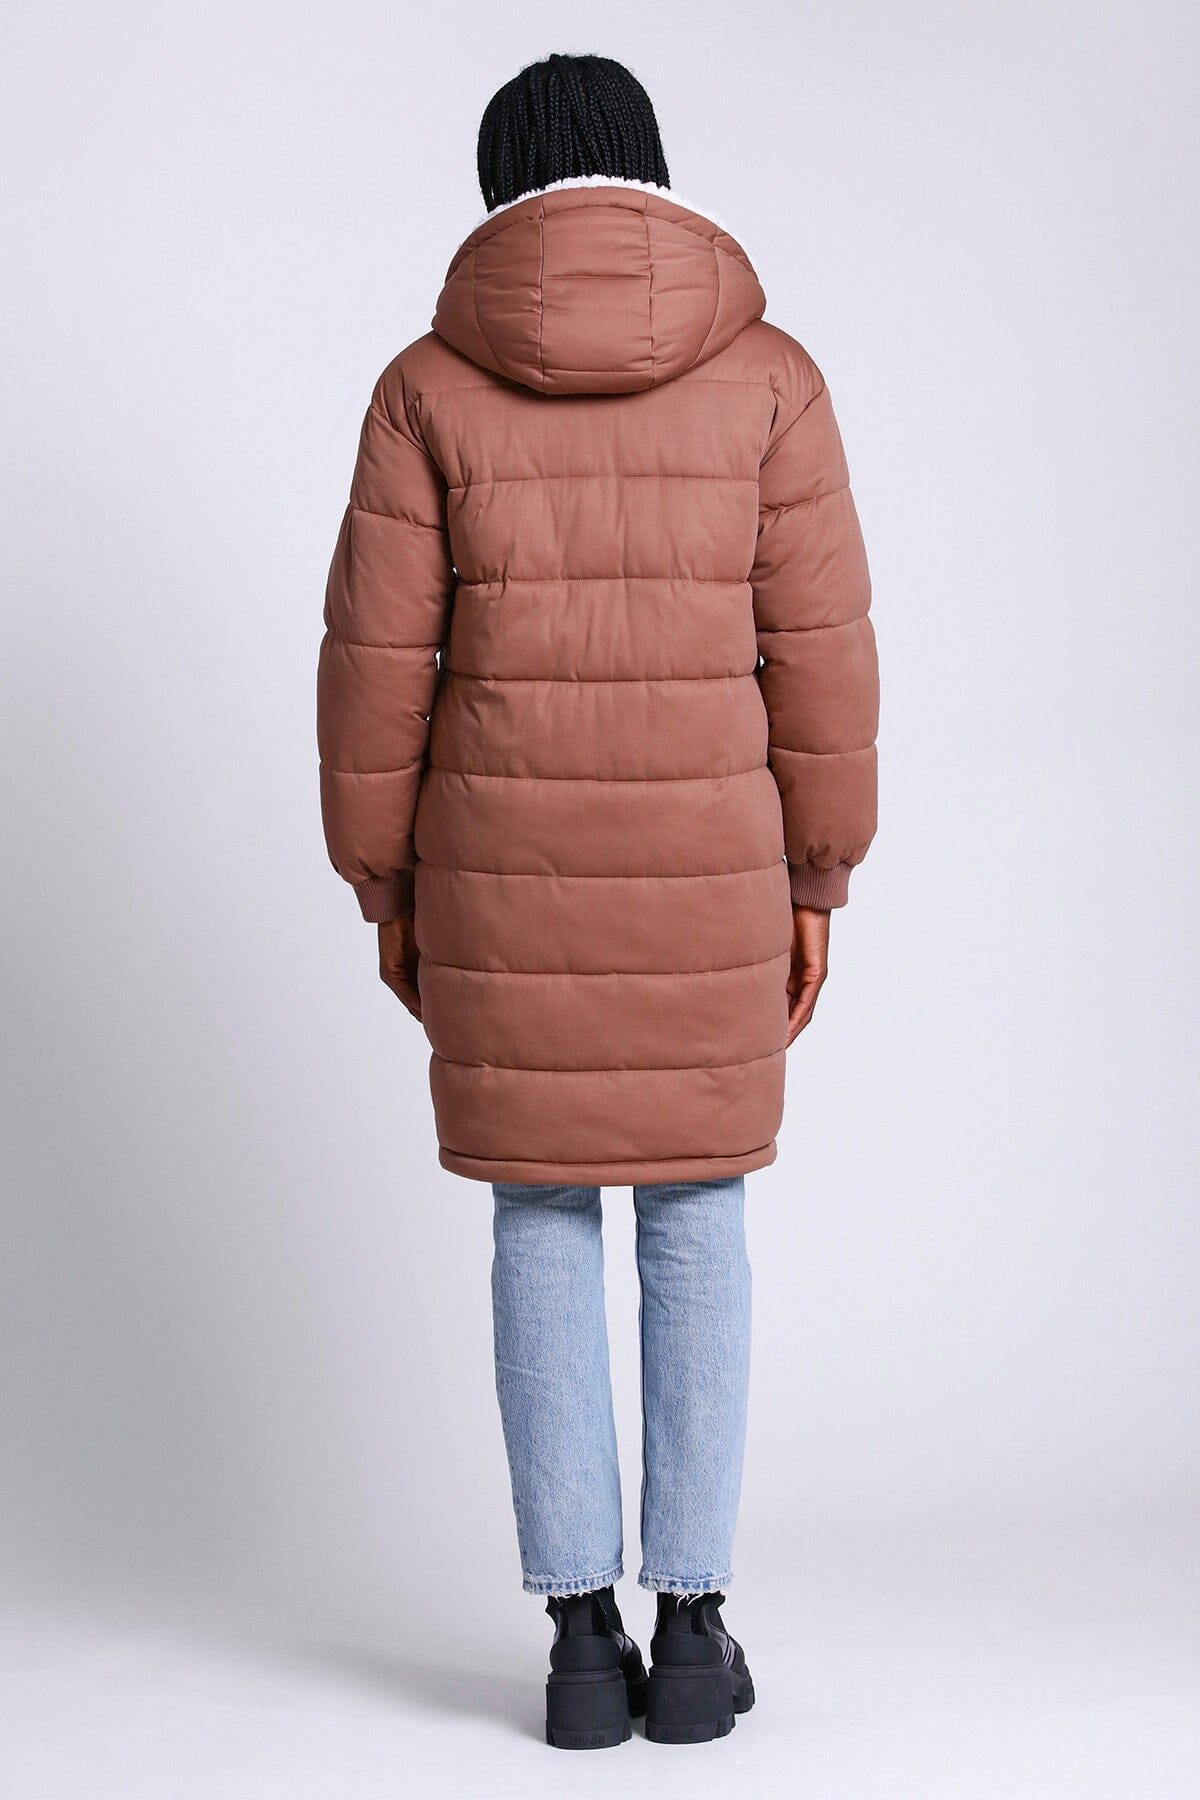 Faux Fur-Lined Puffer Knee Length Coat Outerwear Truffle Brown - Women's Flattering Designer Fashion Cute Fall Winter Coats